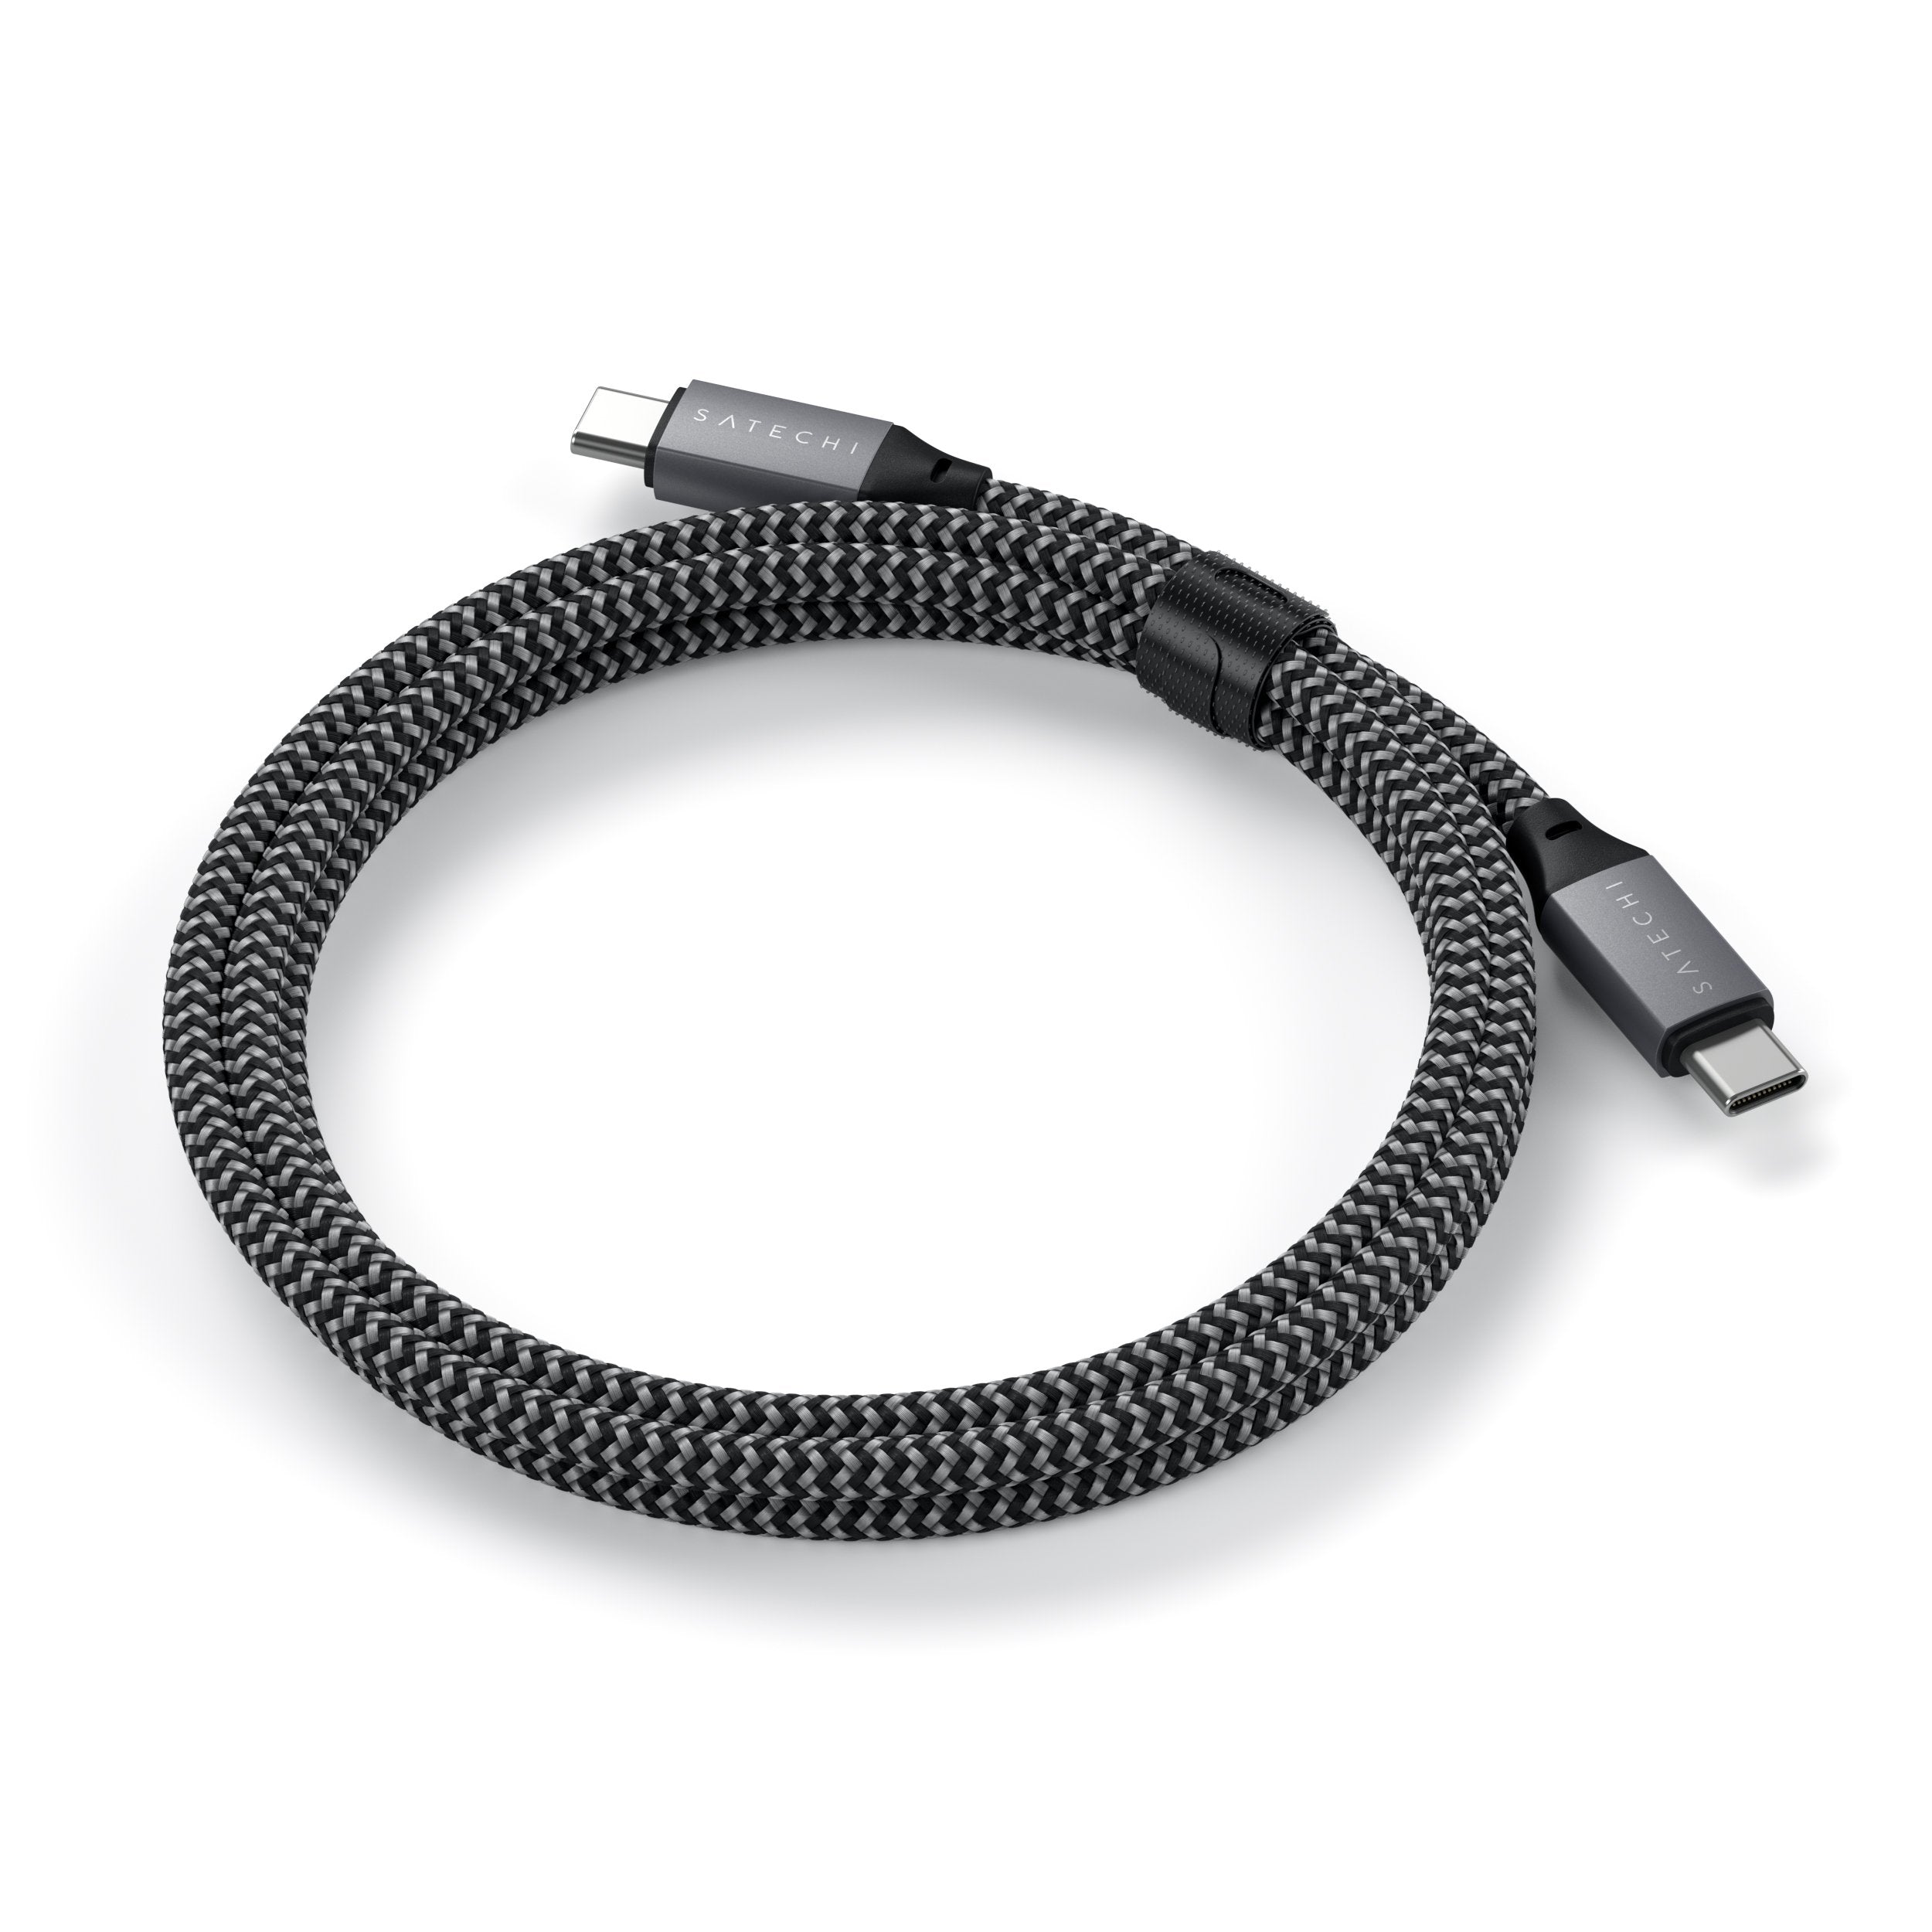 Cable Satechi Lightning USB-C a Cable de Carga Mfi 25cm - Gris